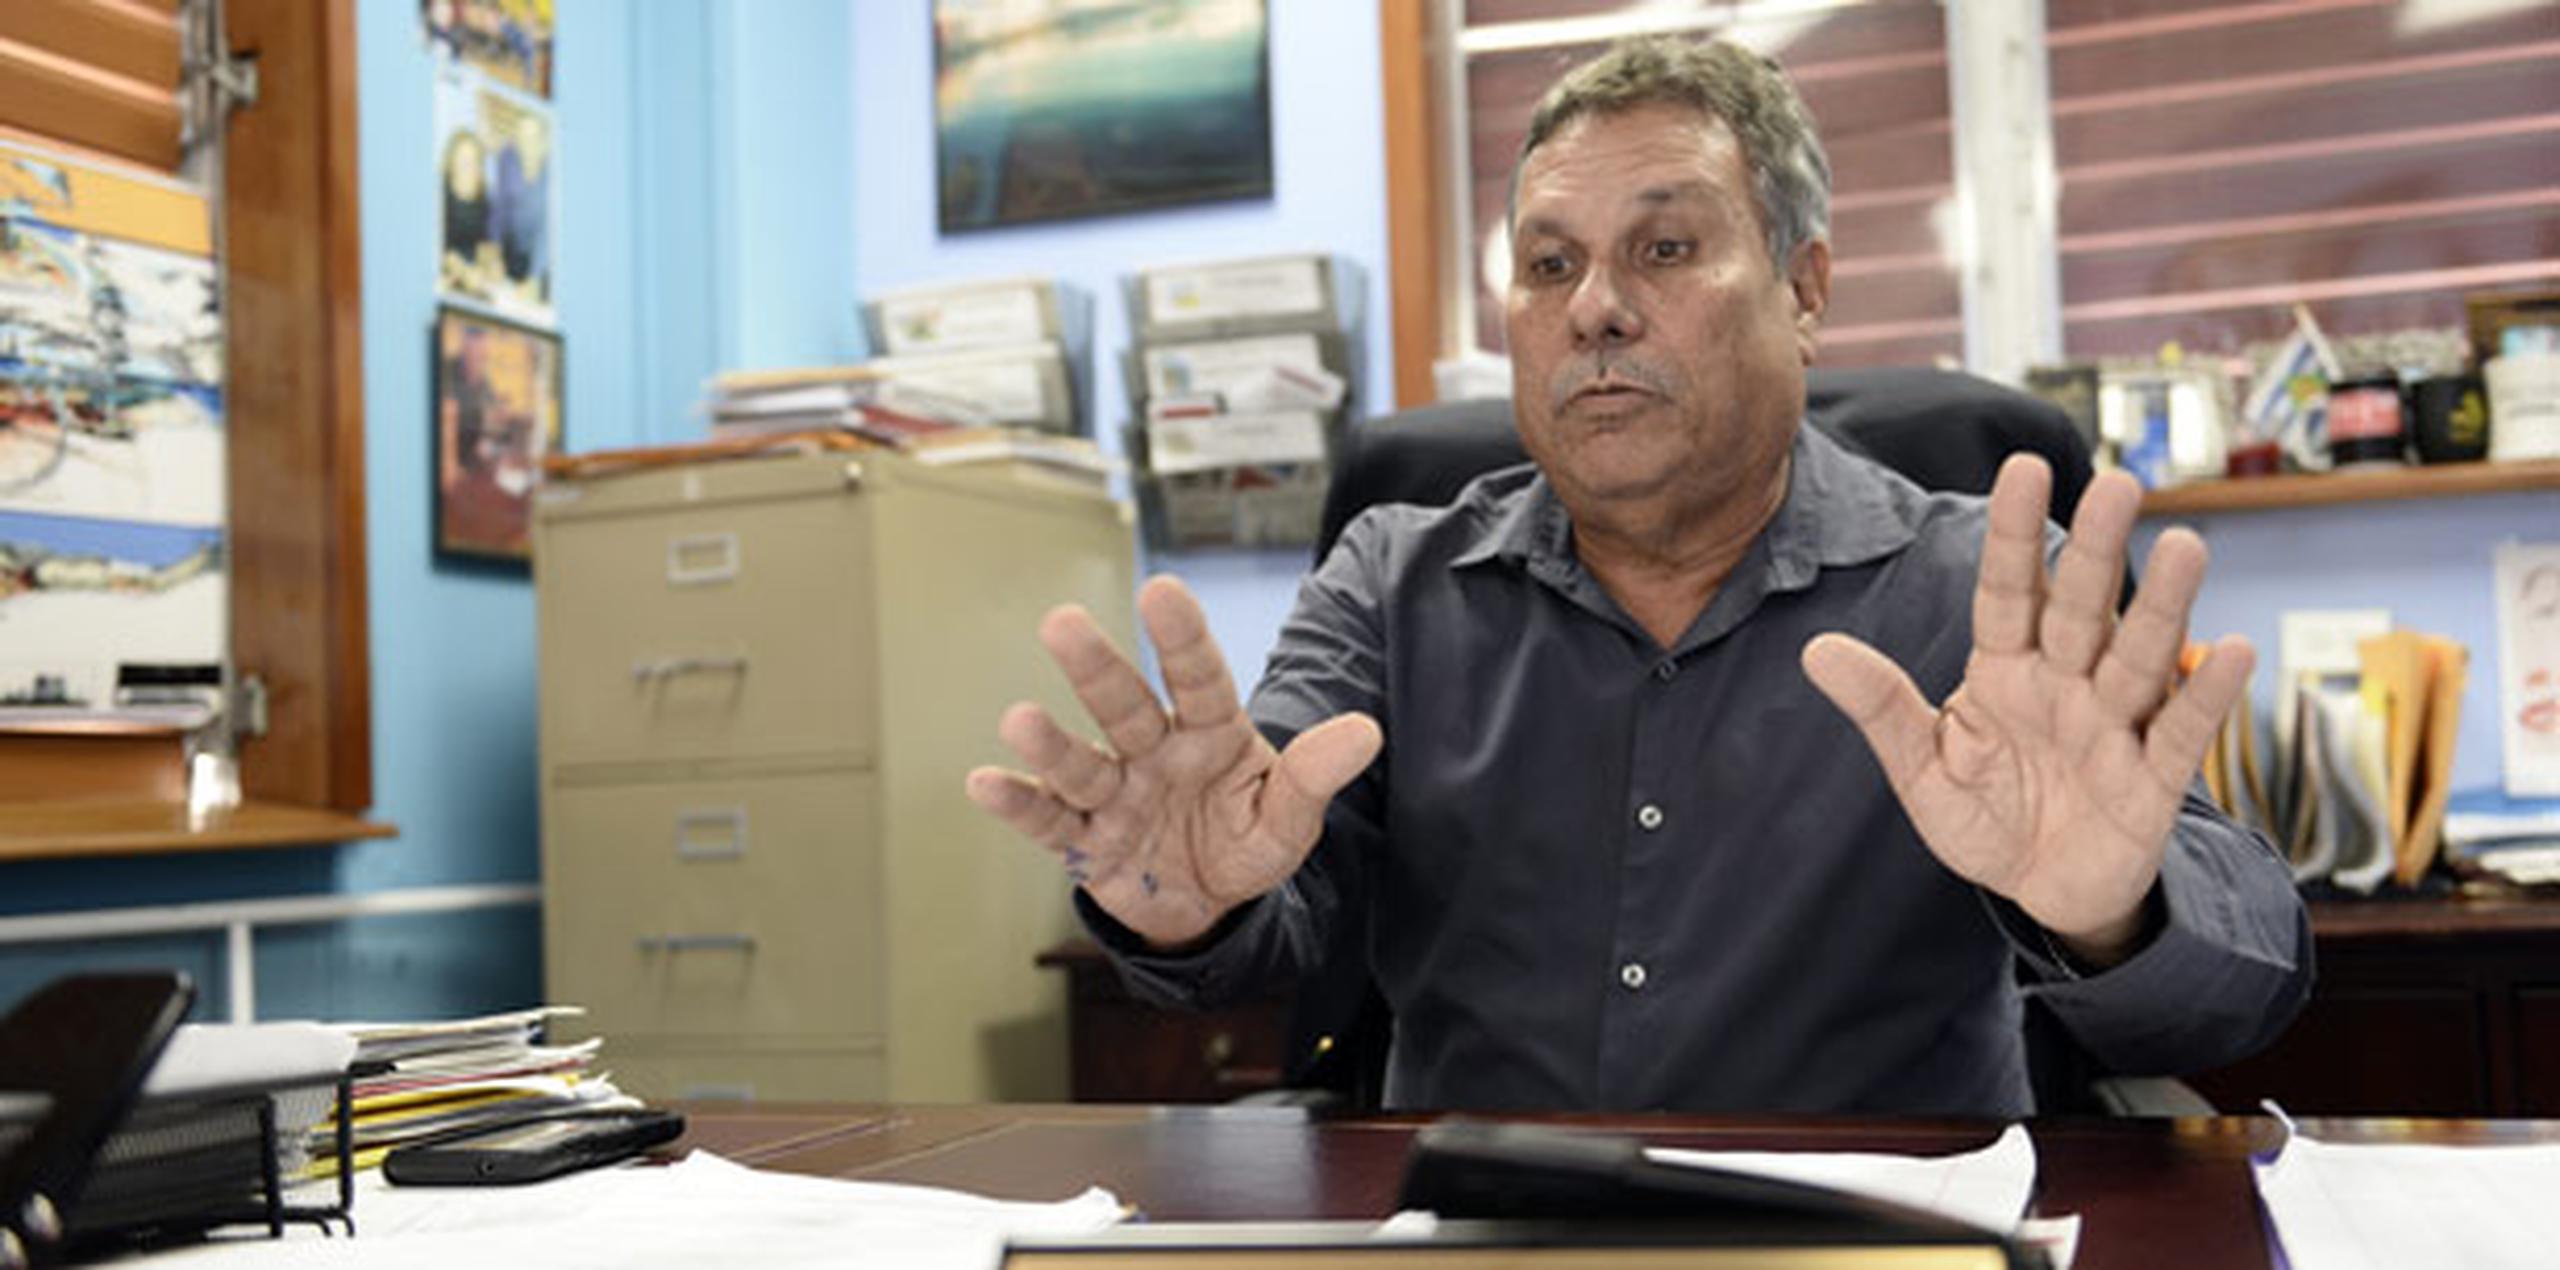 Para aliviar la crisis fiscal que enfrenta, el alcalde viequense Víctor Emeric proyecta hacer un préstamo de $2.5 millones.  (gerald.lopez2gfrmedia.com)